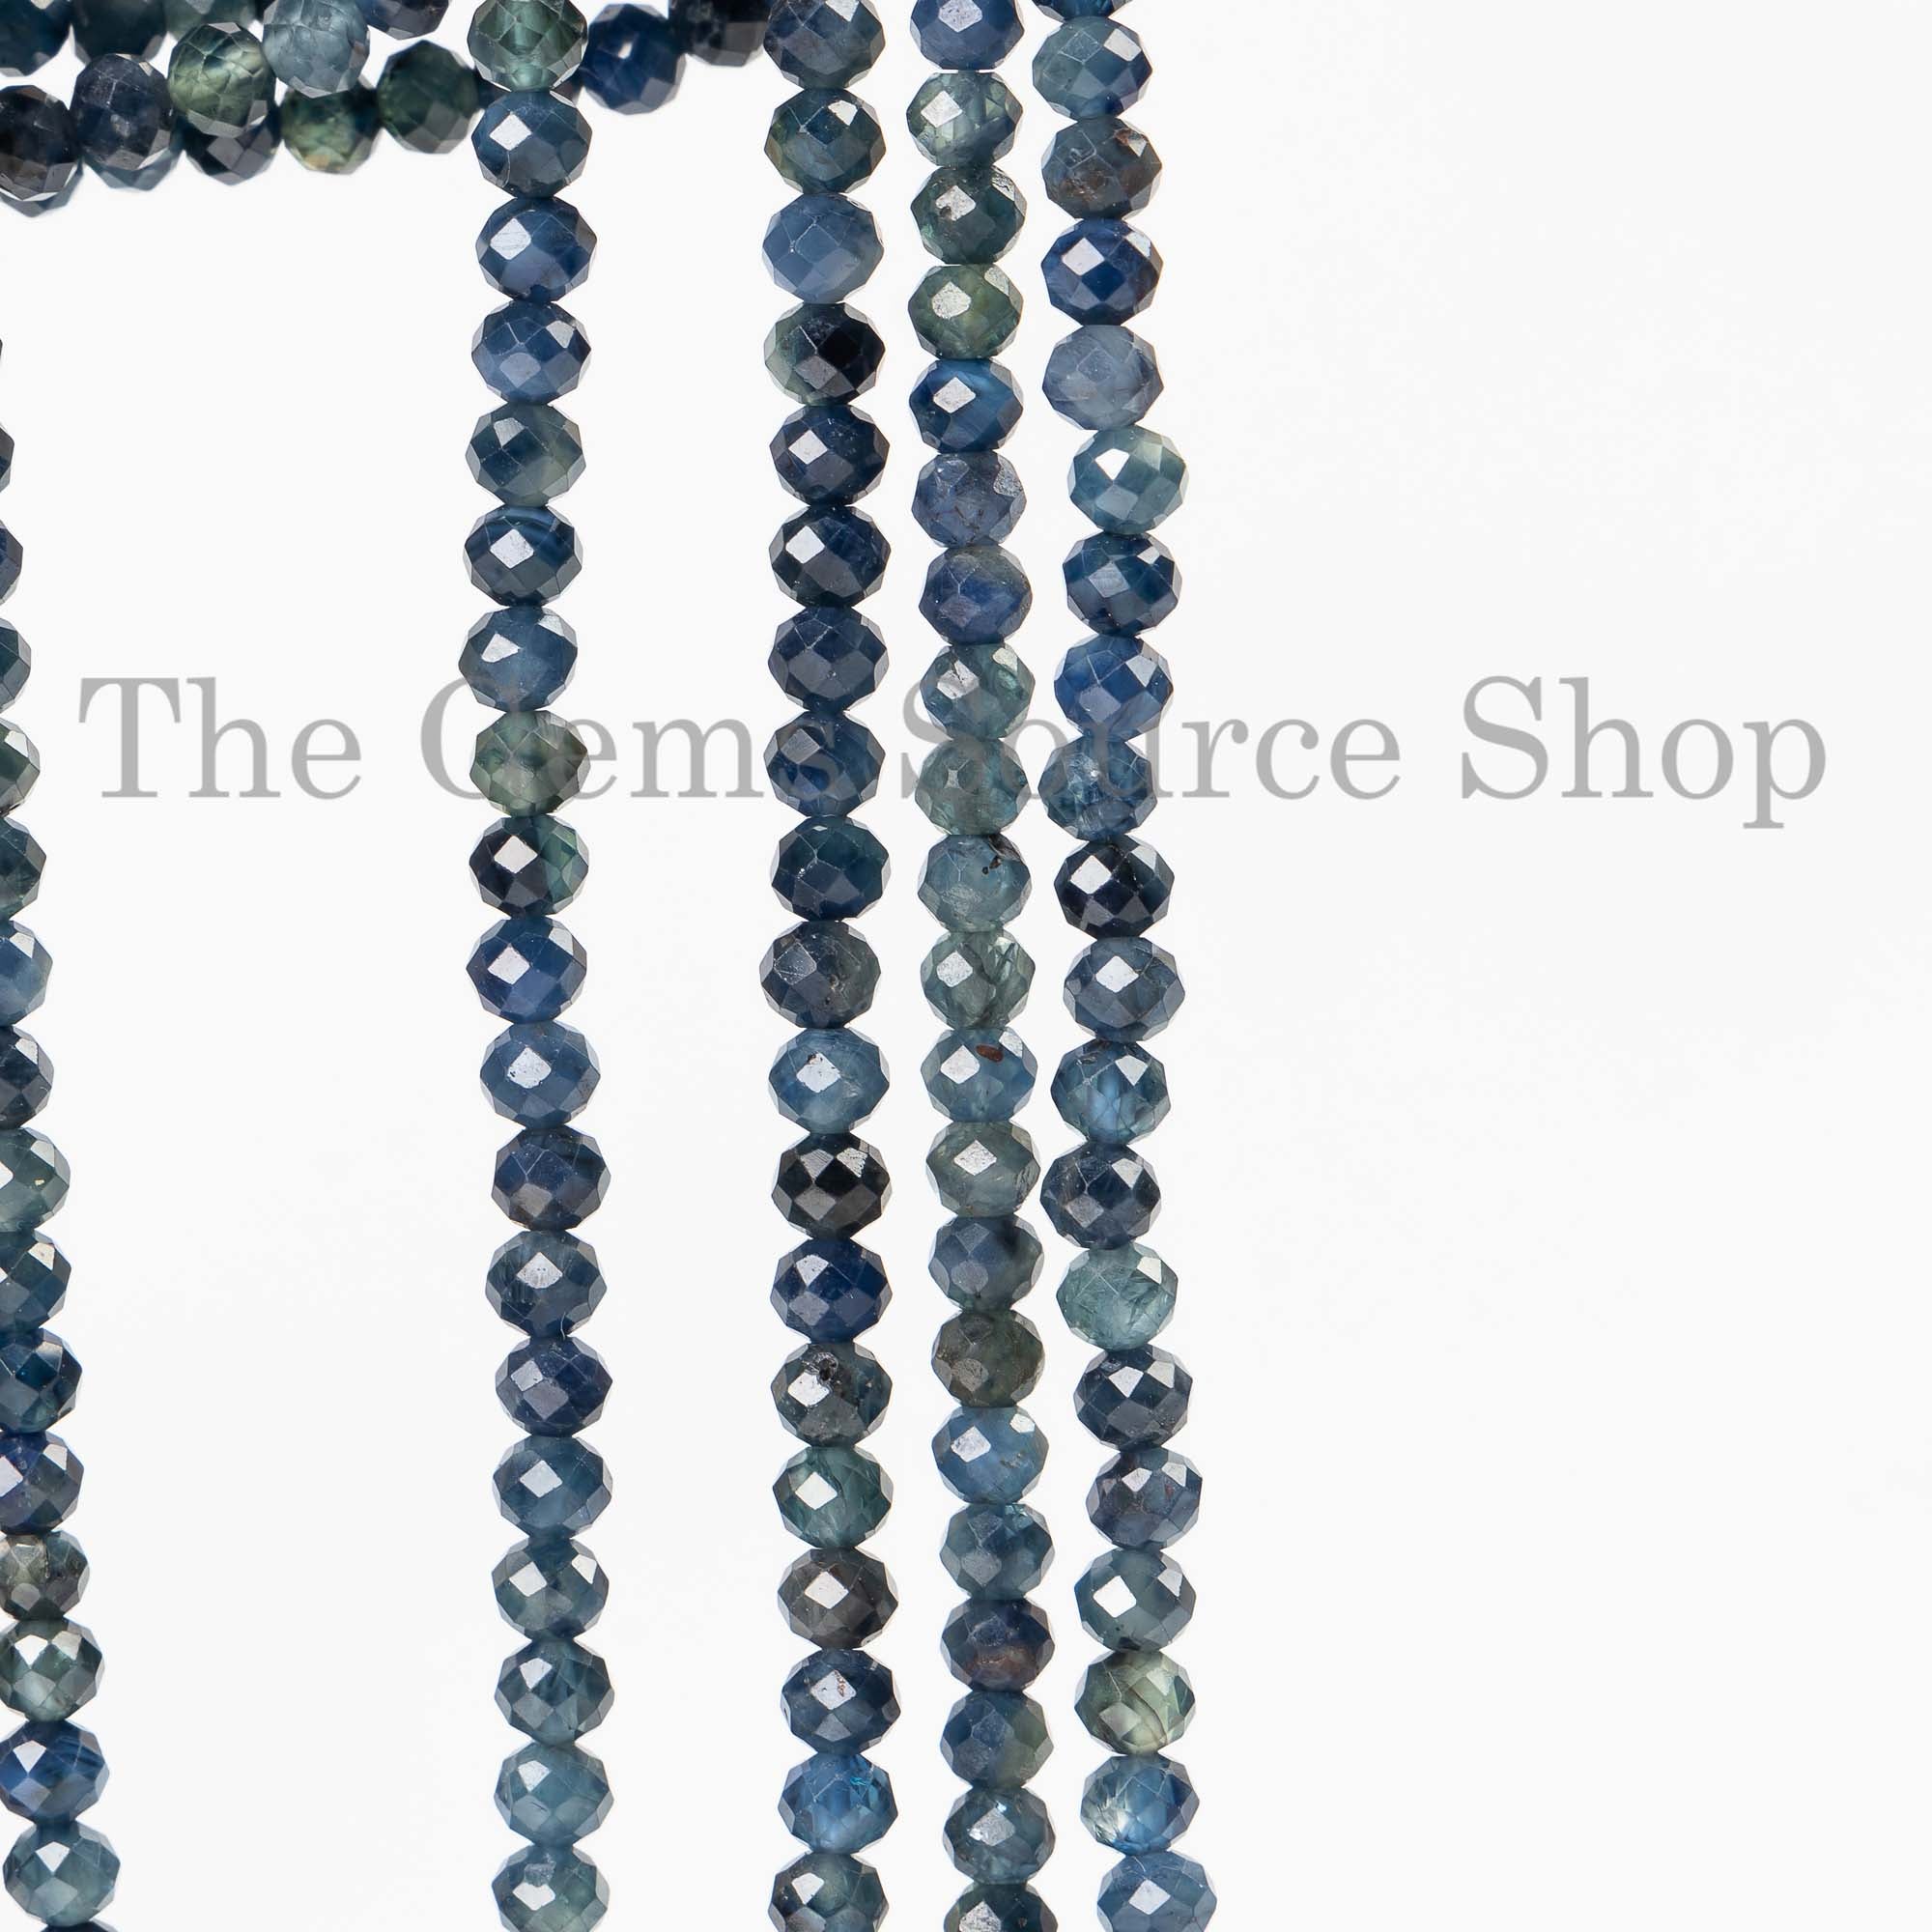 3.25-3.5mm Mystic Sapphire Rondelle Beads, Mystic Sapphire Beads, Sapphire Rondelle Beads, Sapphire Gemstone Beads, Sapphire Jewelry